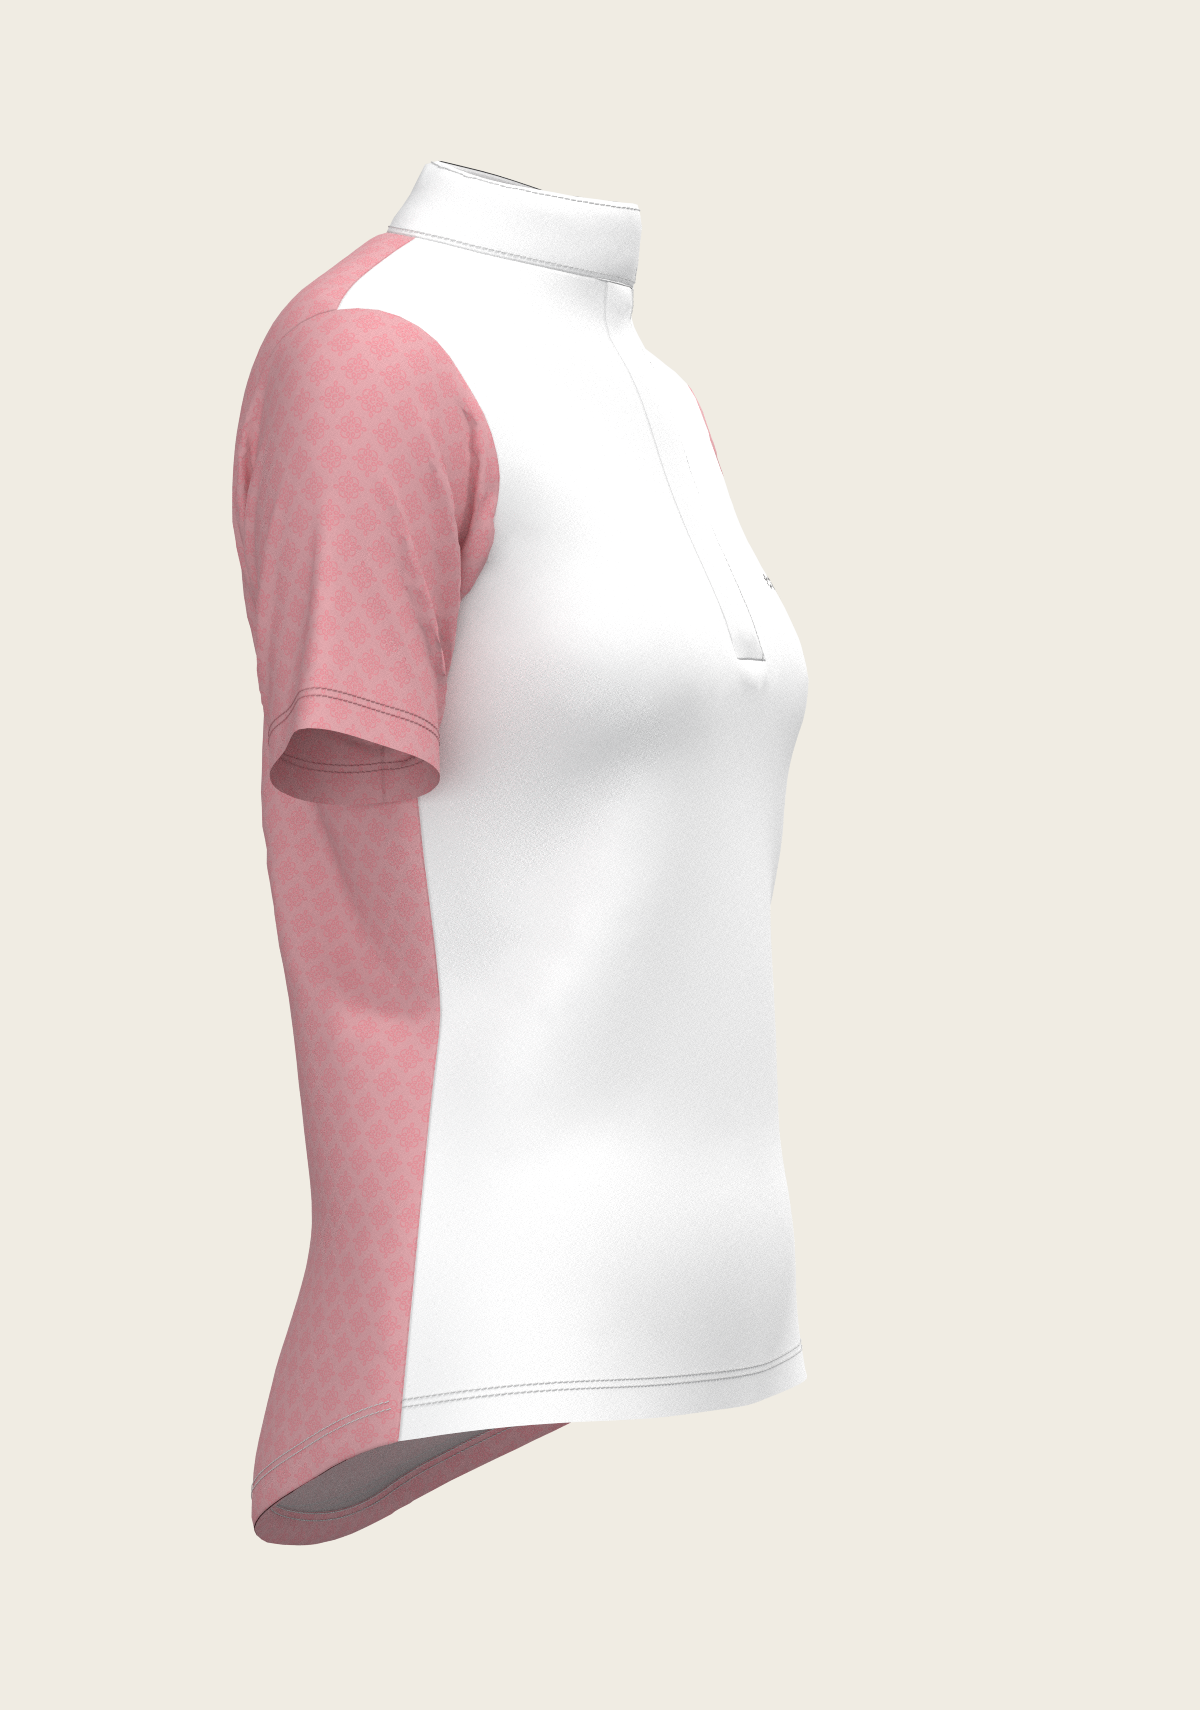 Rose Short Sleeve Show Shirt